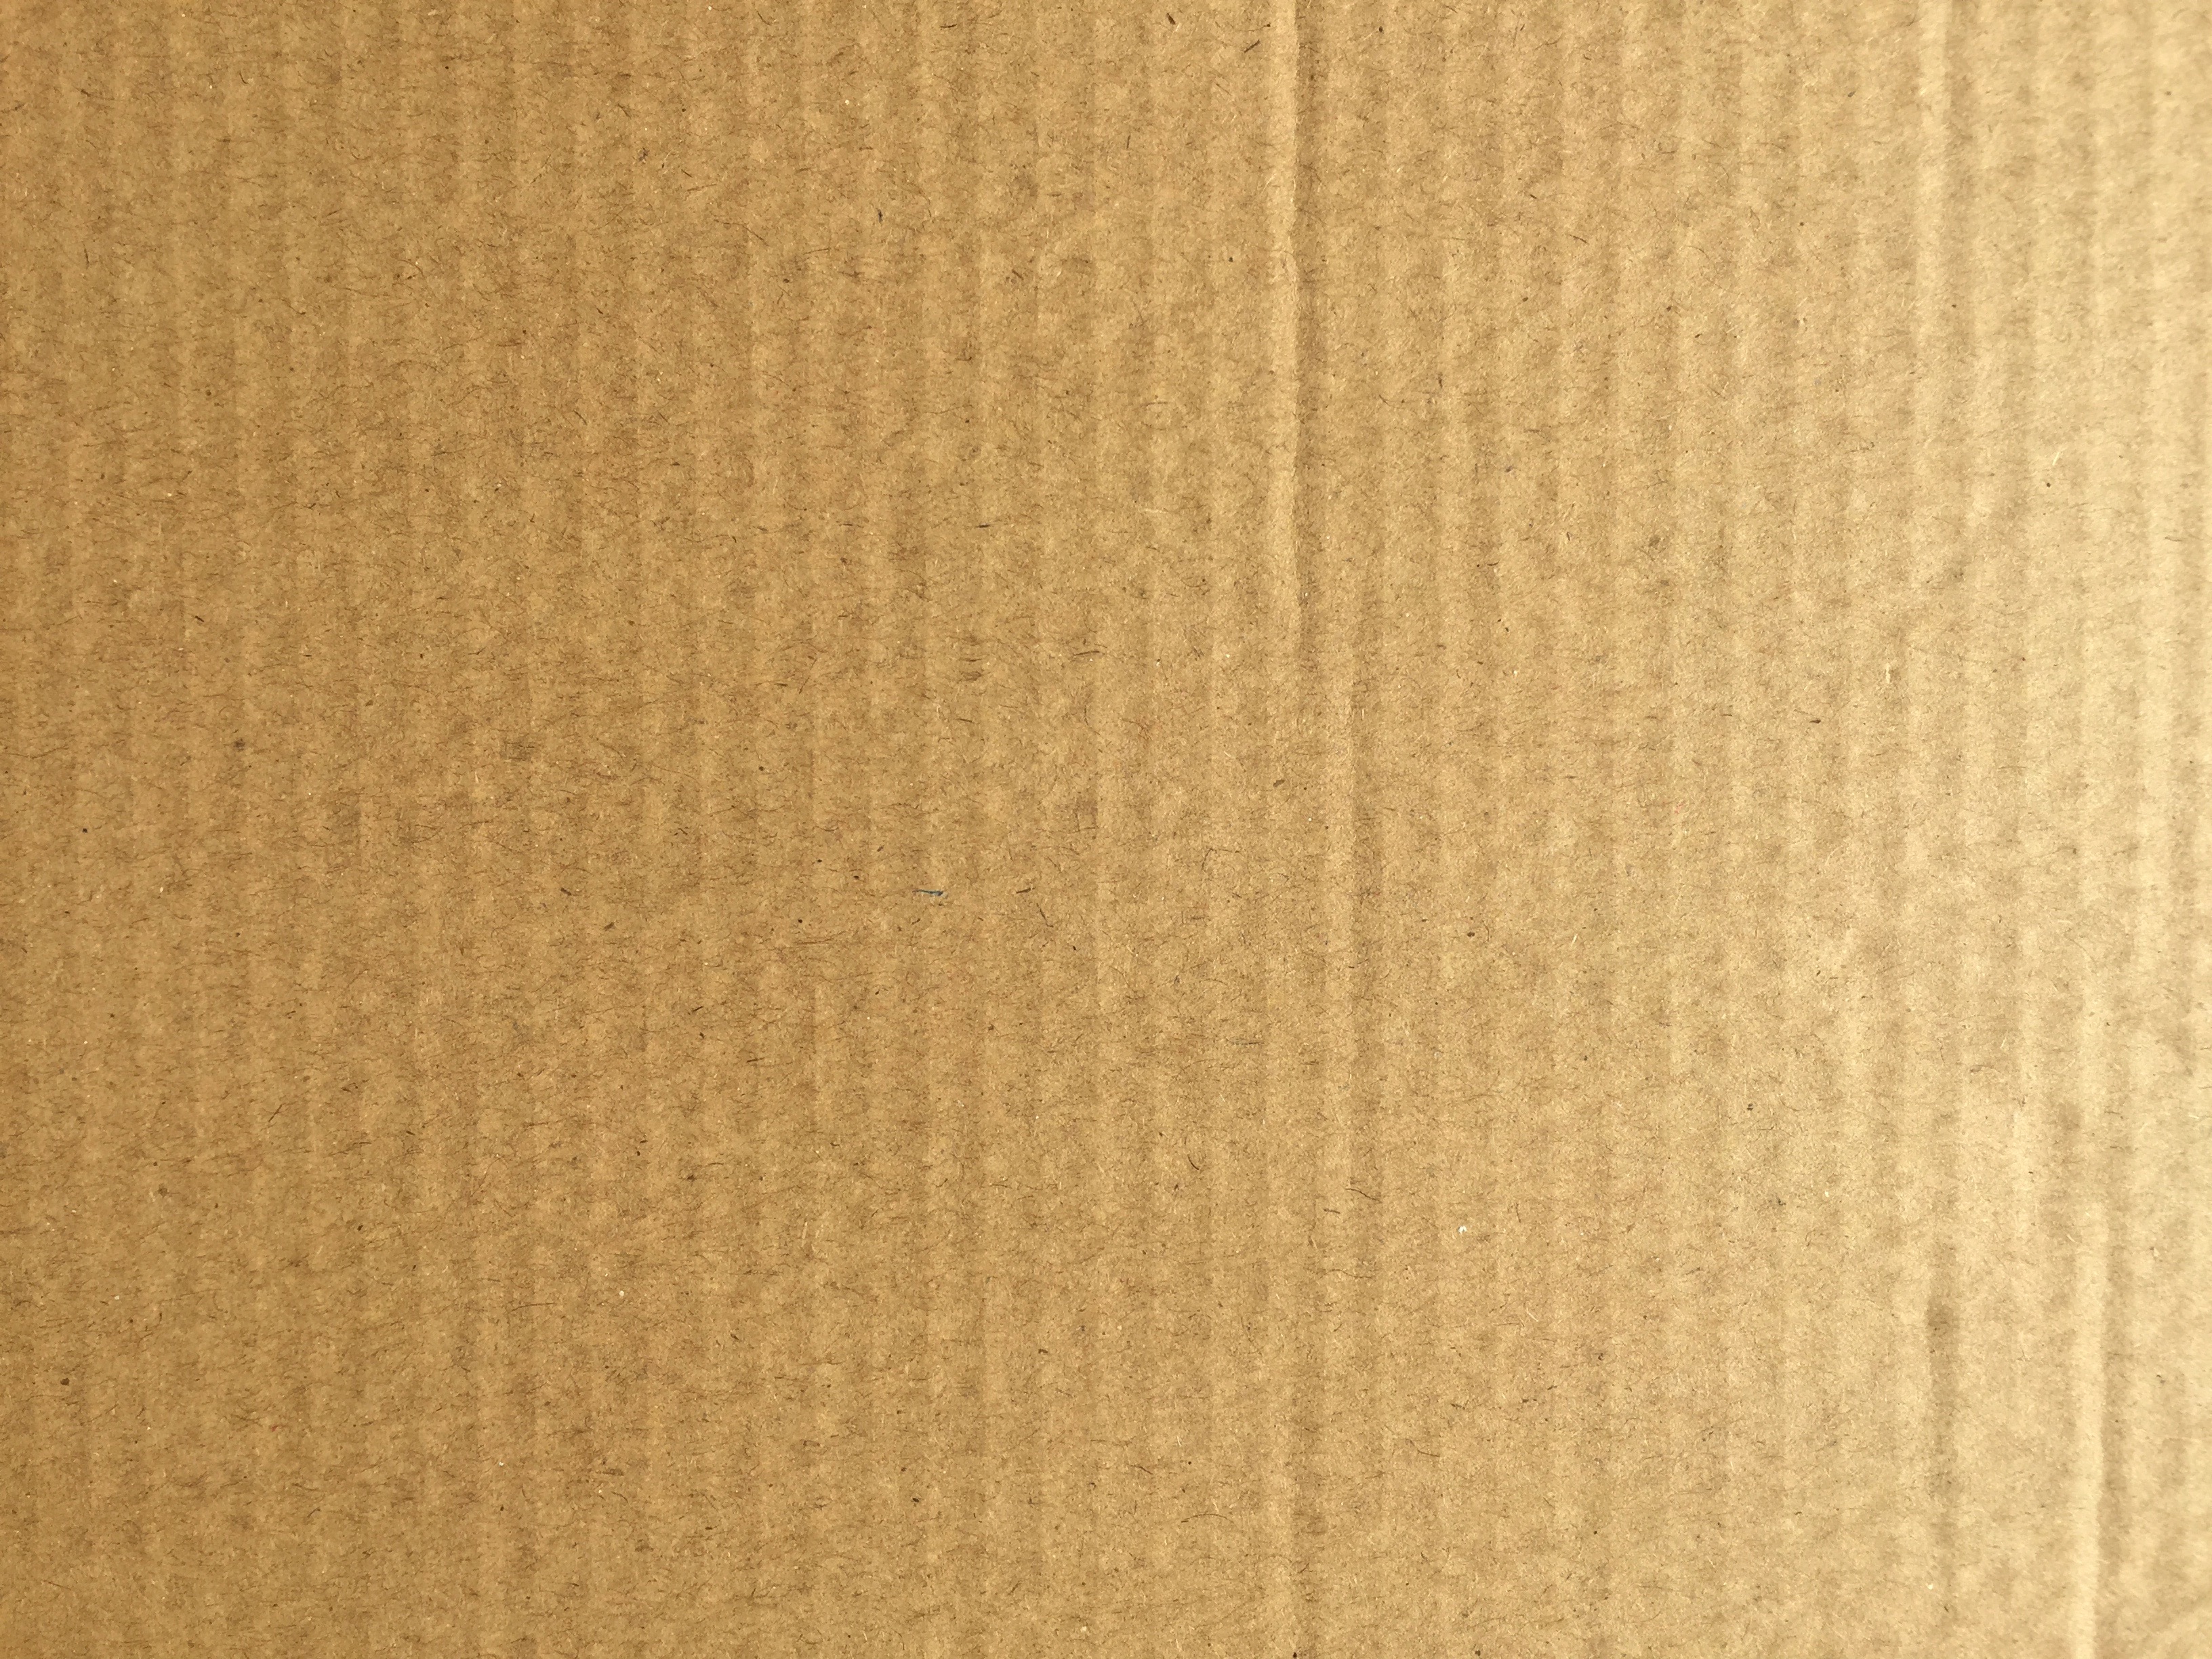 Golden brown corrugated cardboard paper